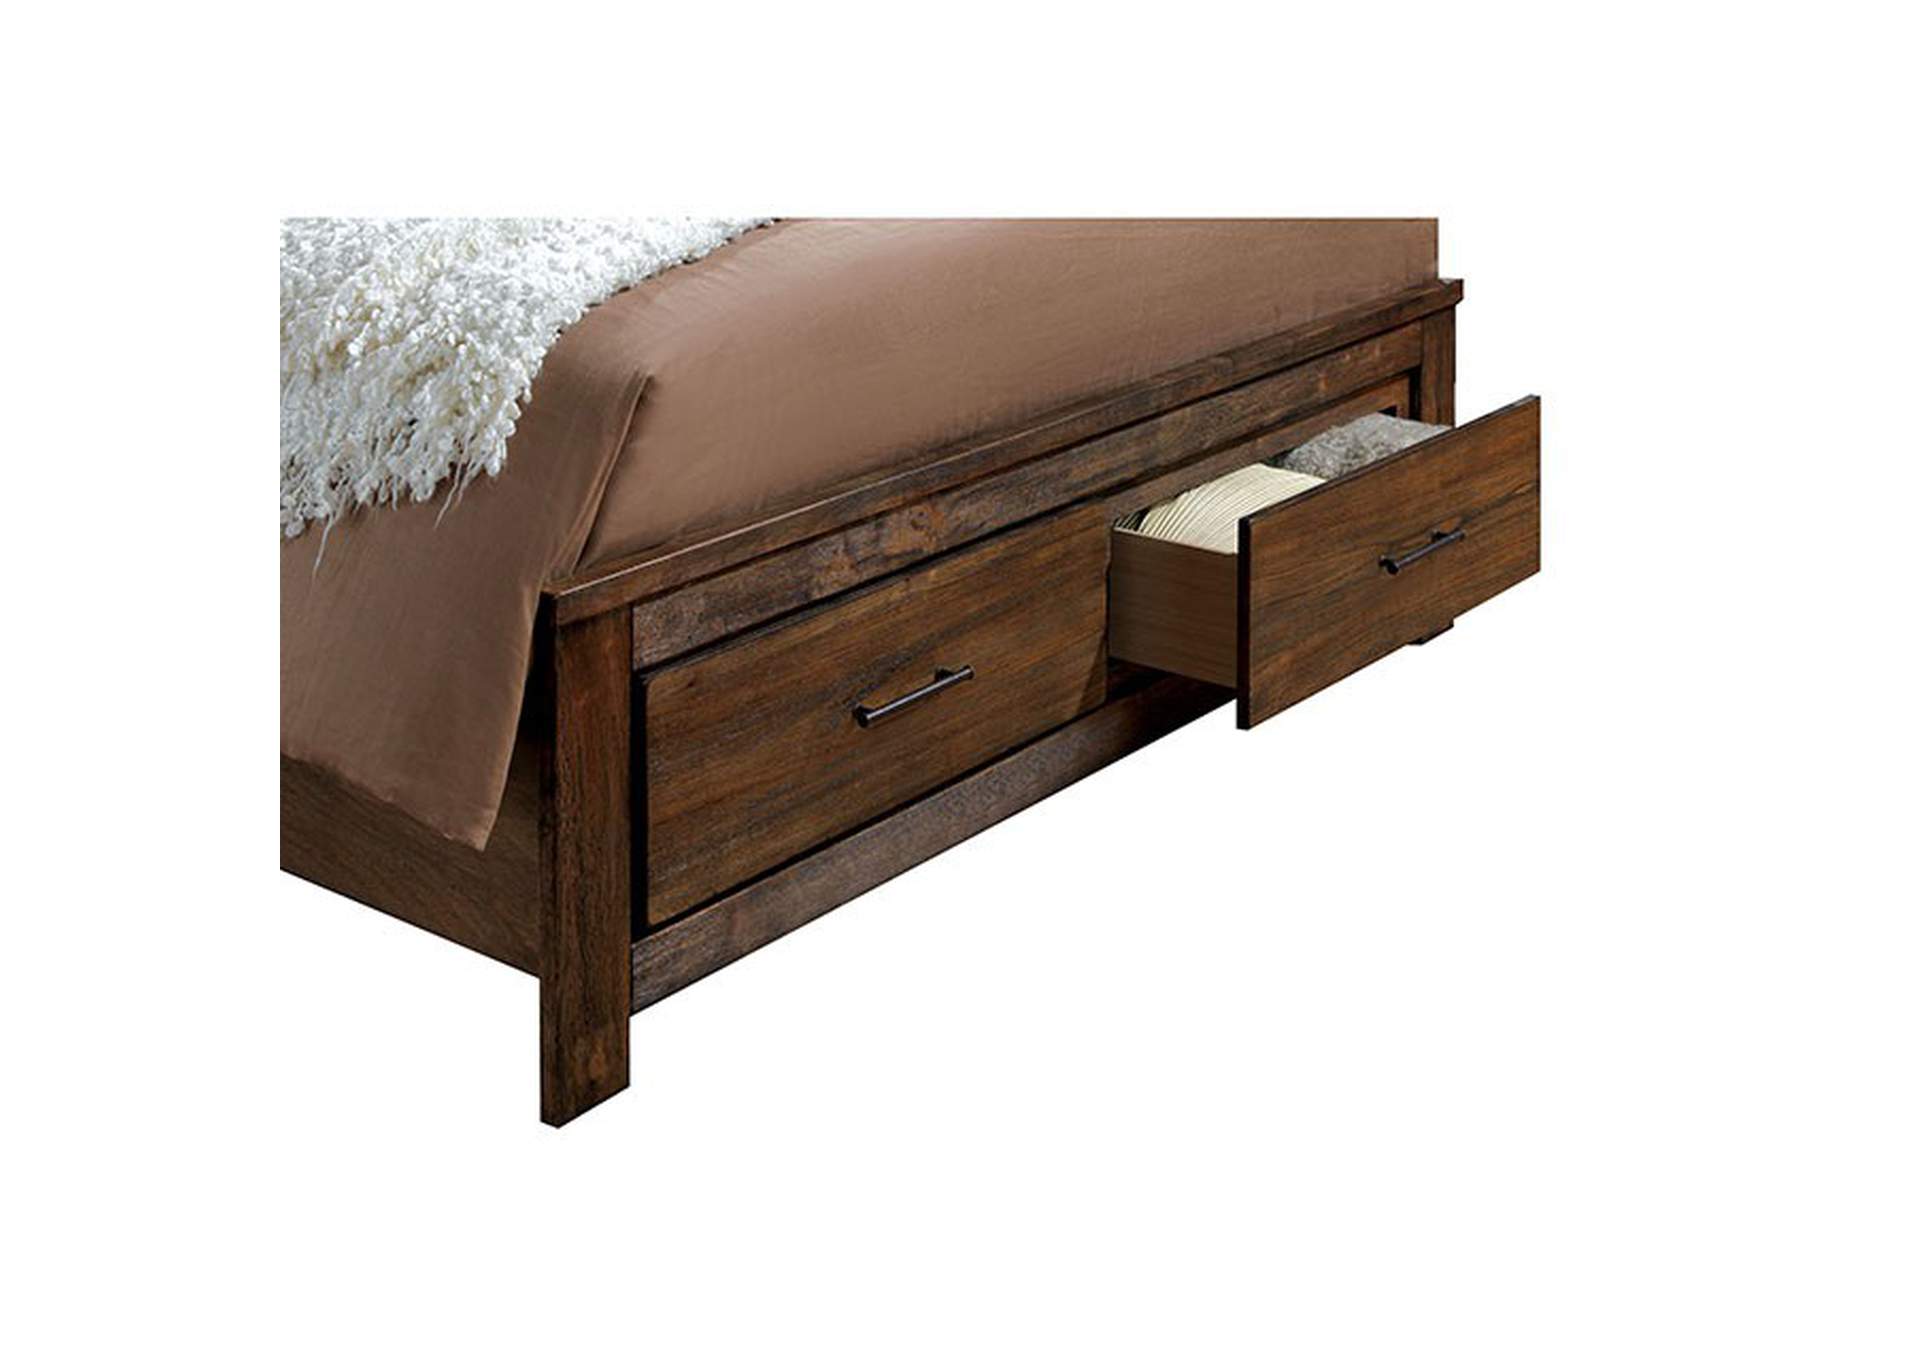 Elkton Queen Bed,Furniture of America